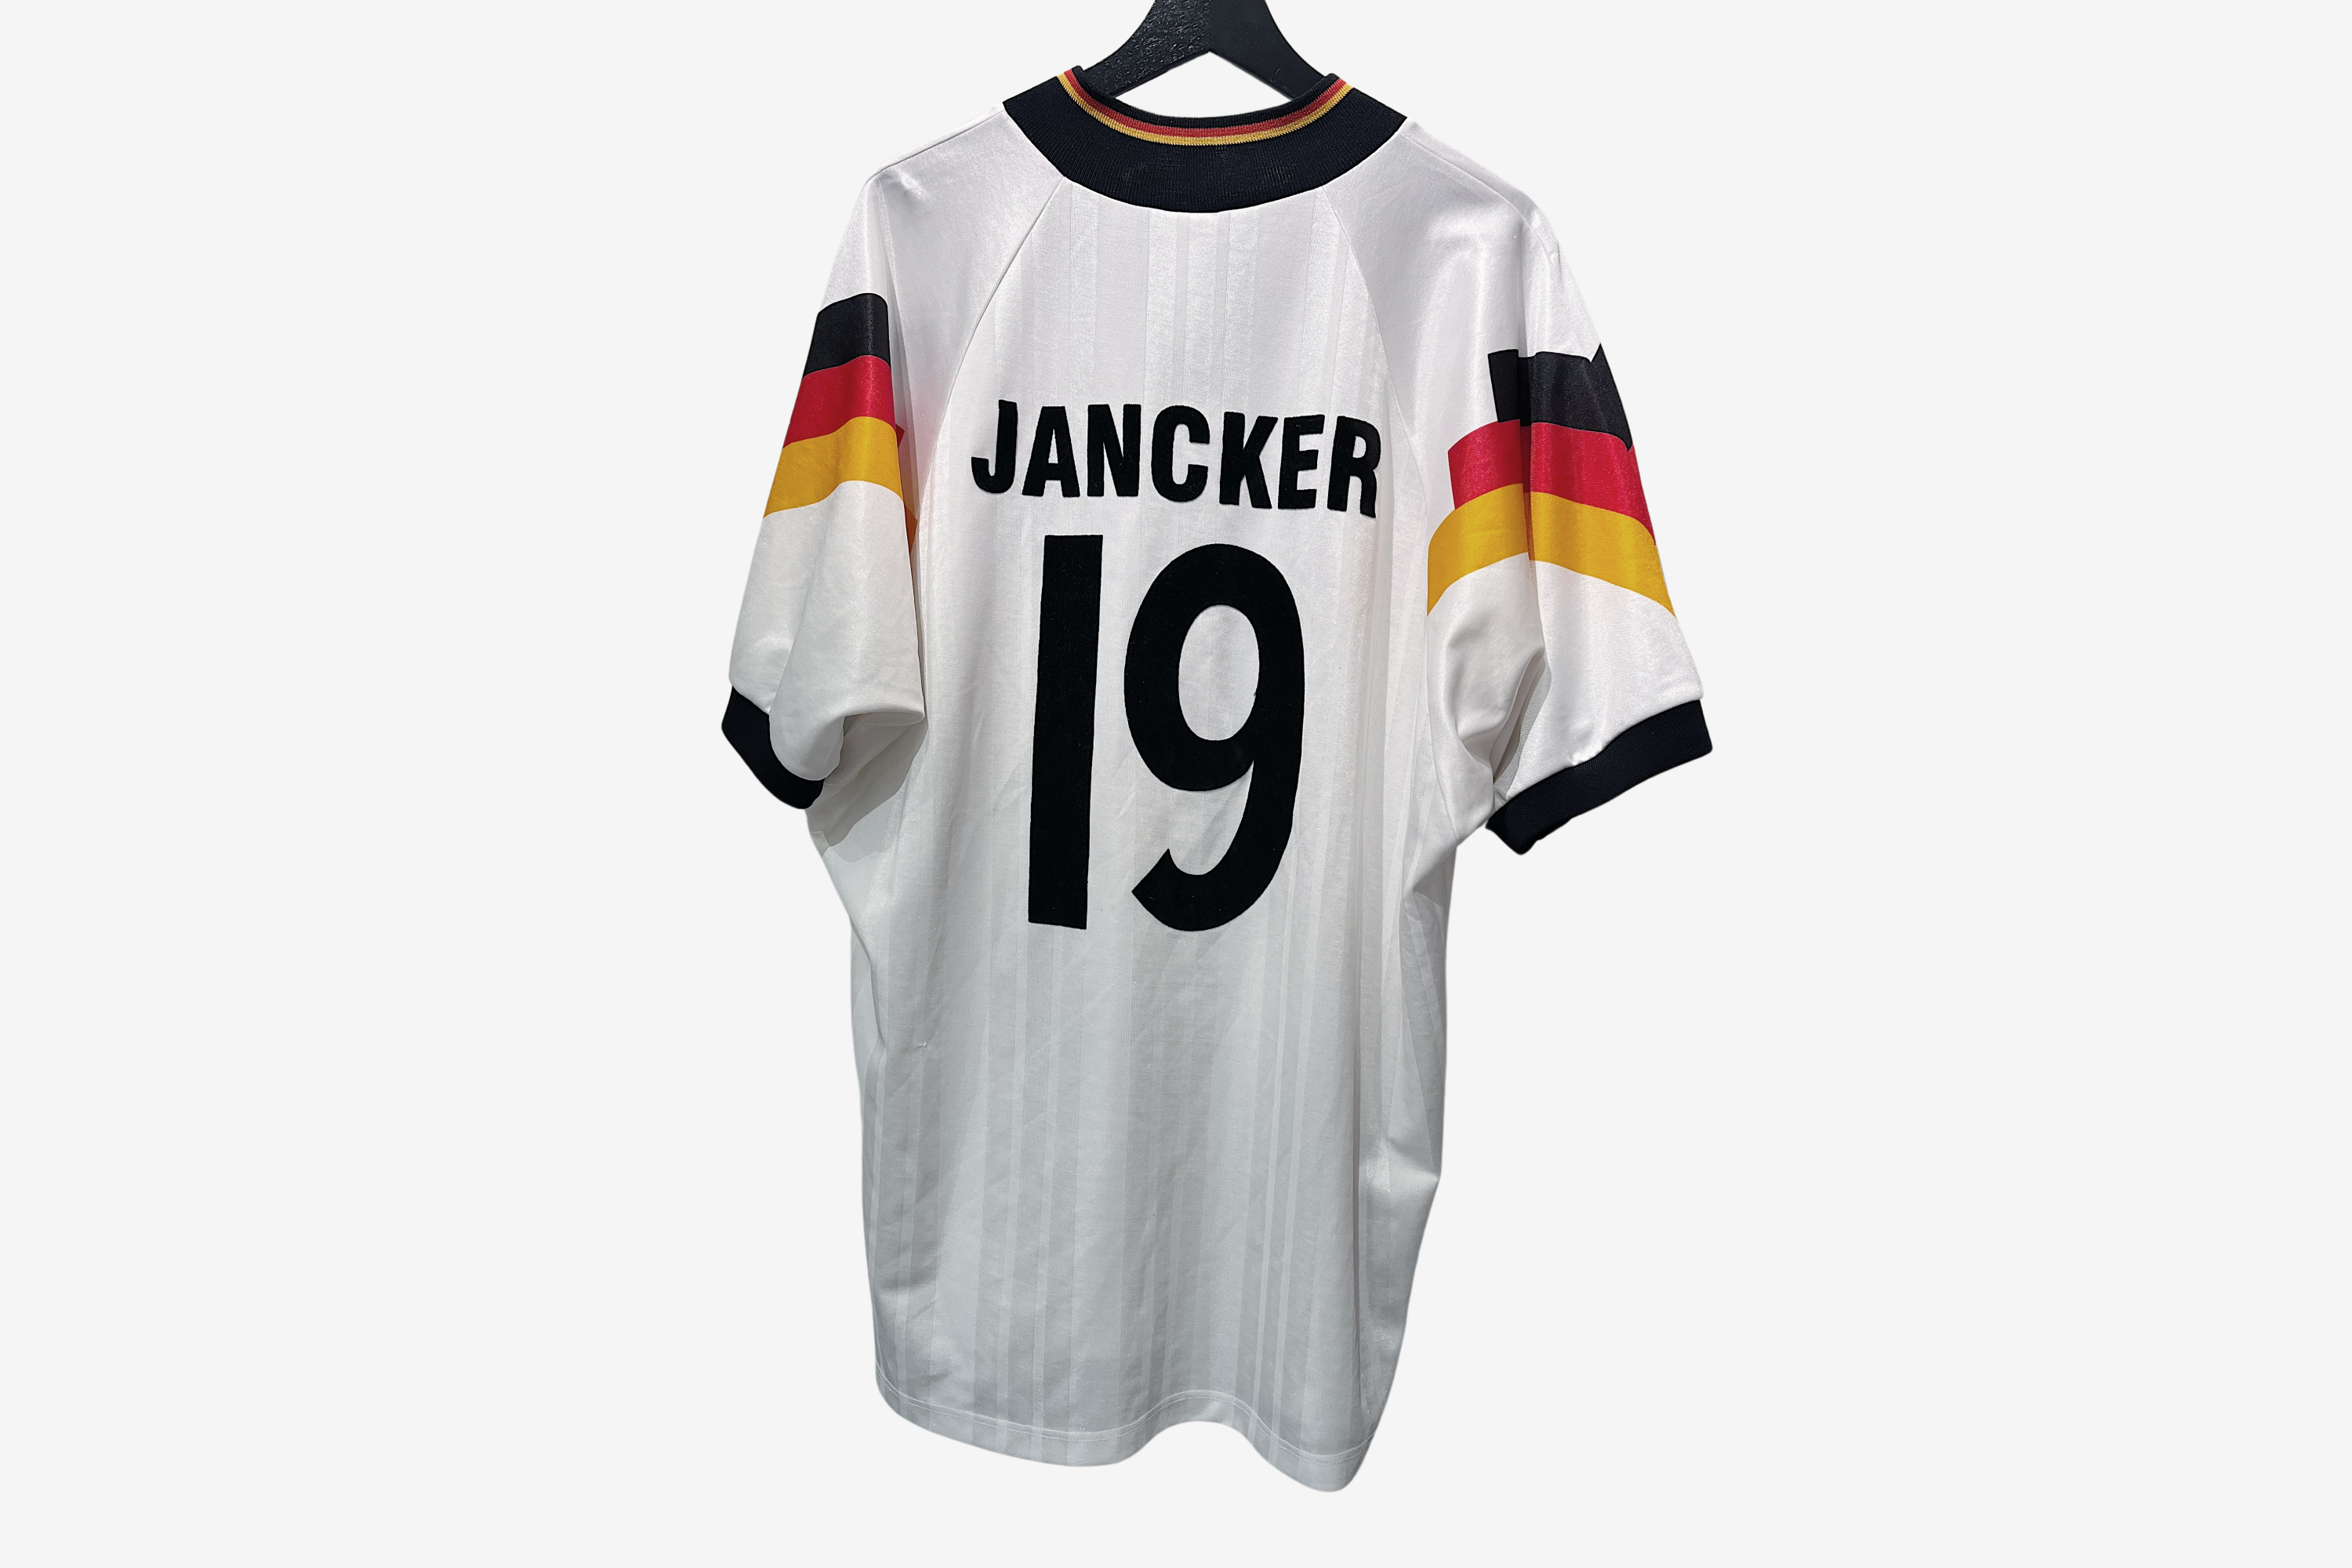 Adidas - Germany 1992 Home Football Shirt 'JANCKER'